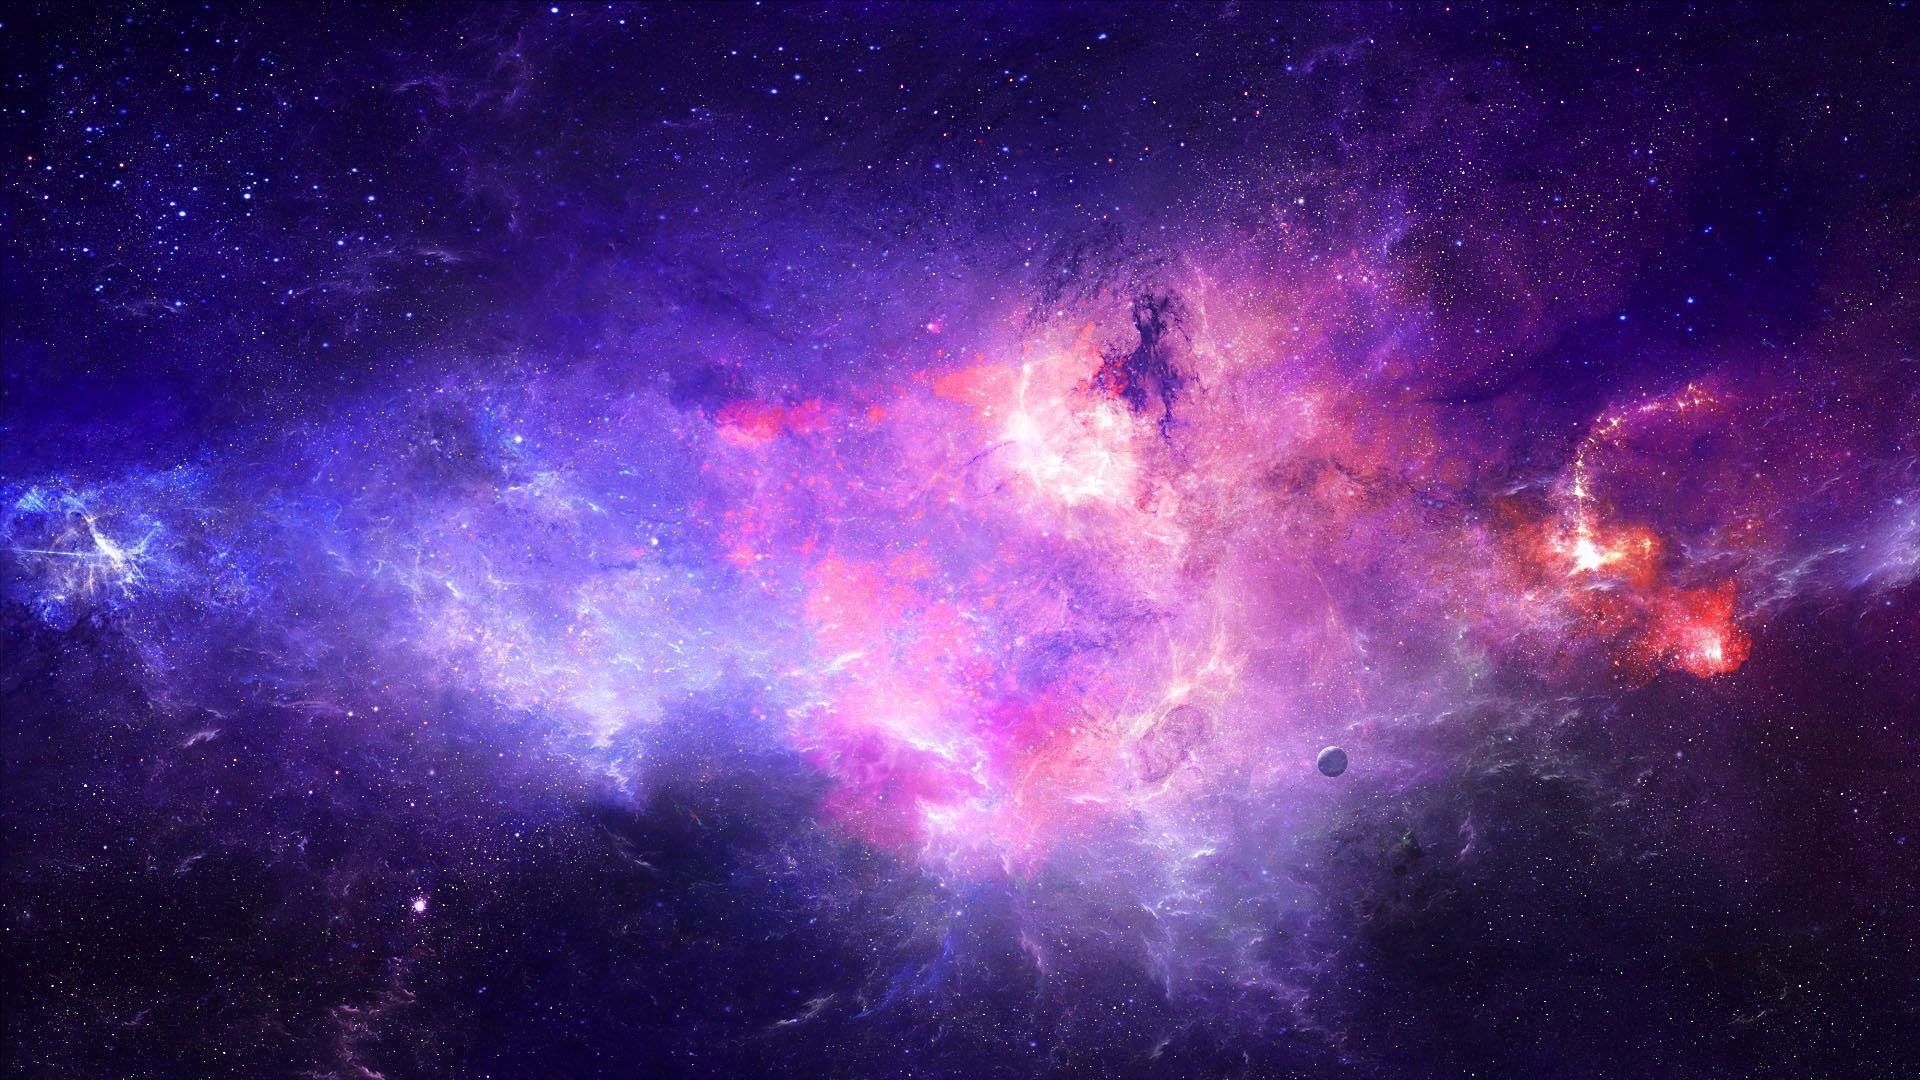 HD Space Wallpaper Image